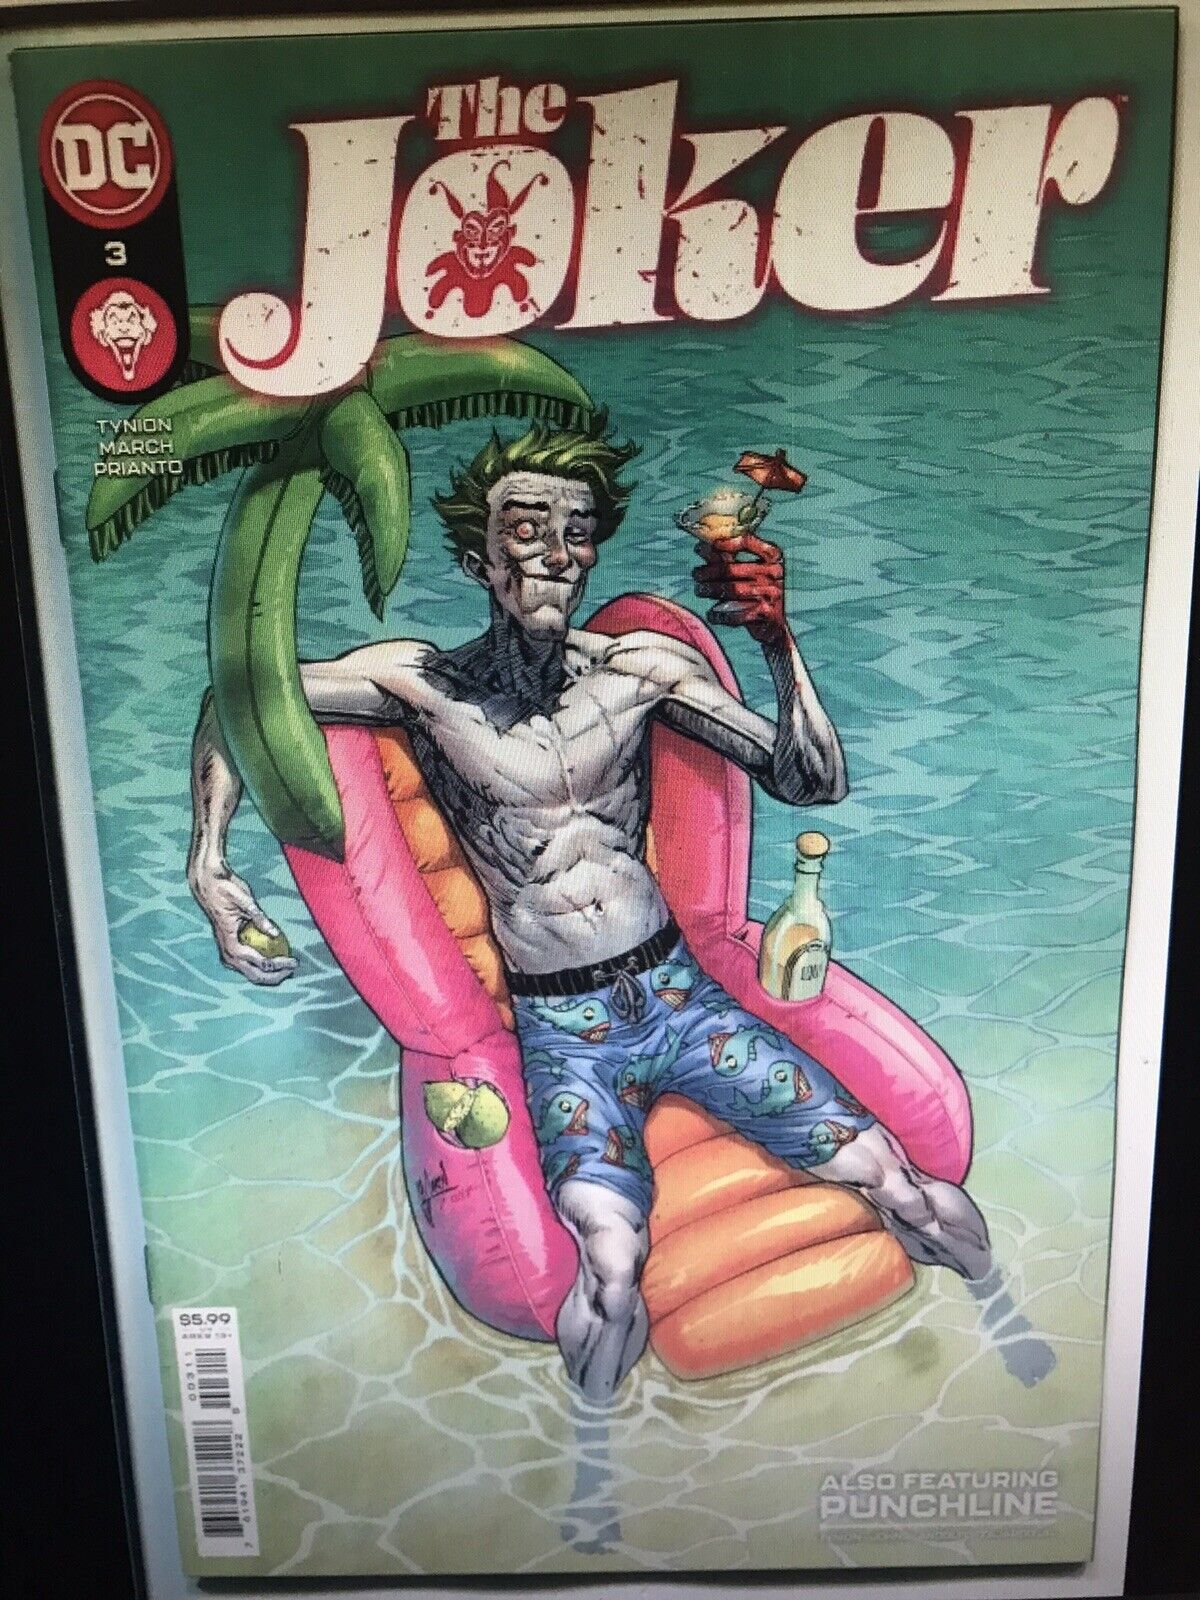 2021 Joker #3 NM/M (2)Copies A&B COVERS